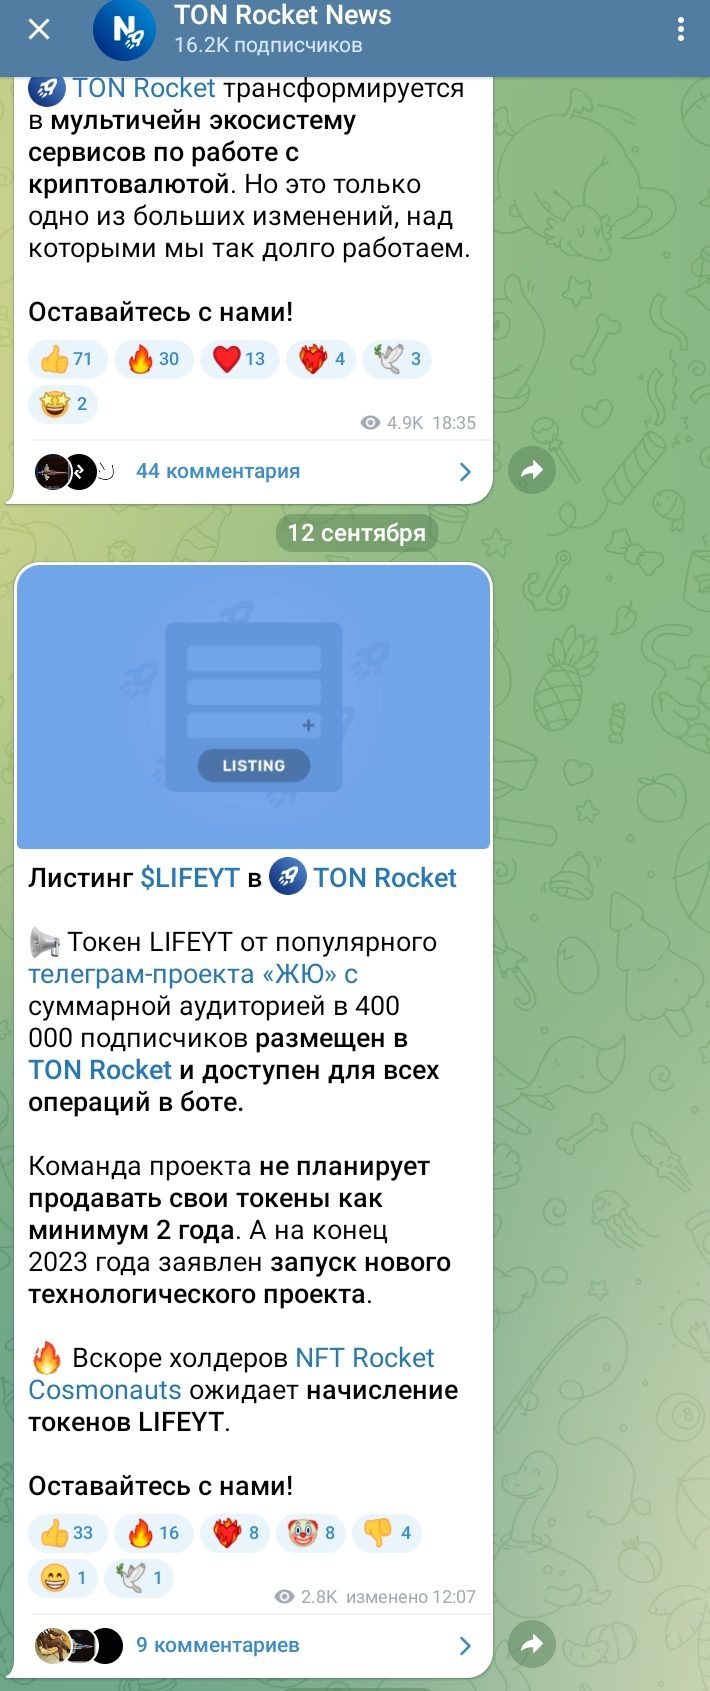 TON Rocket not телеграмм